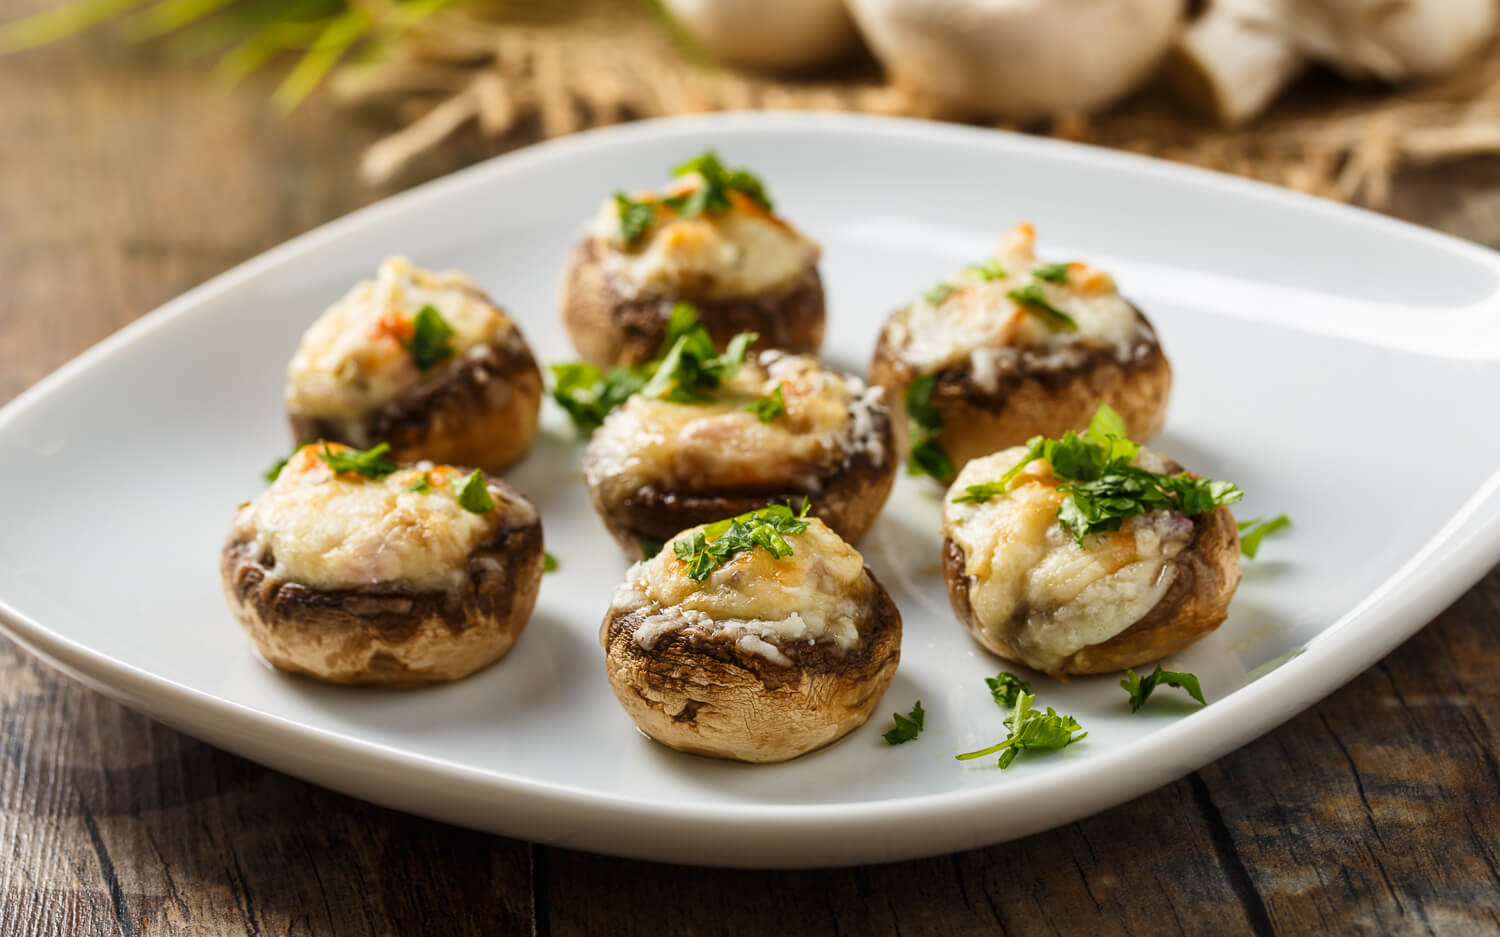 Healthy Holiday Appetizers - Stuffed Portobello Mushrooms